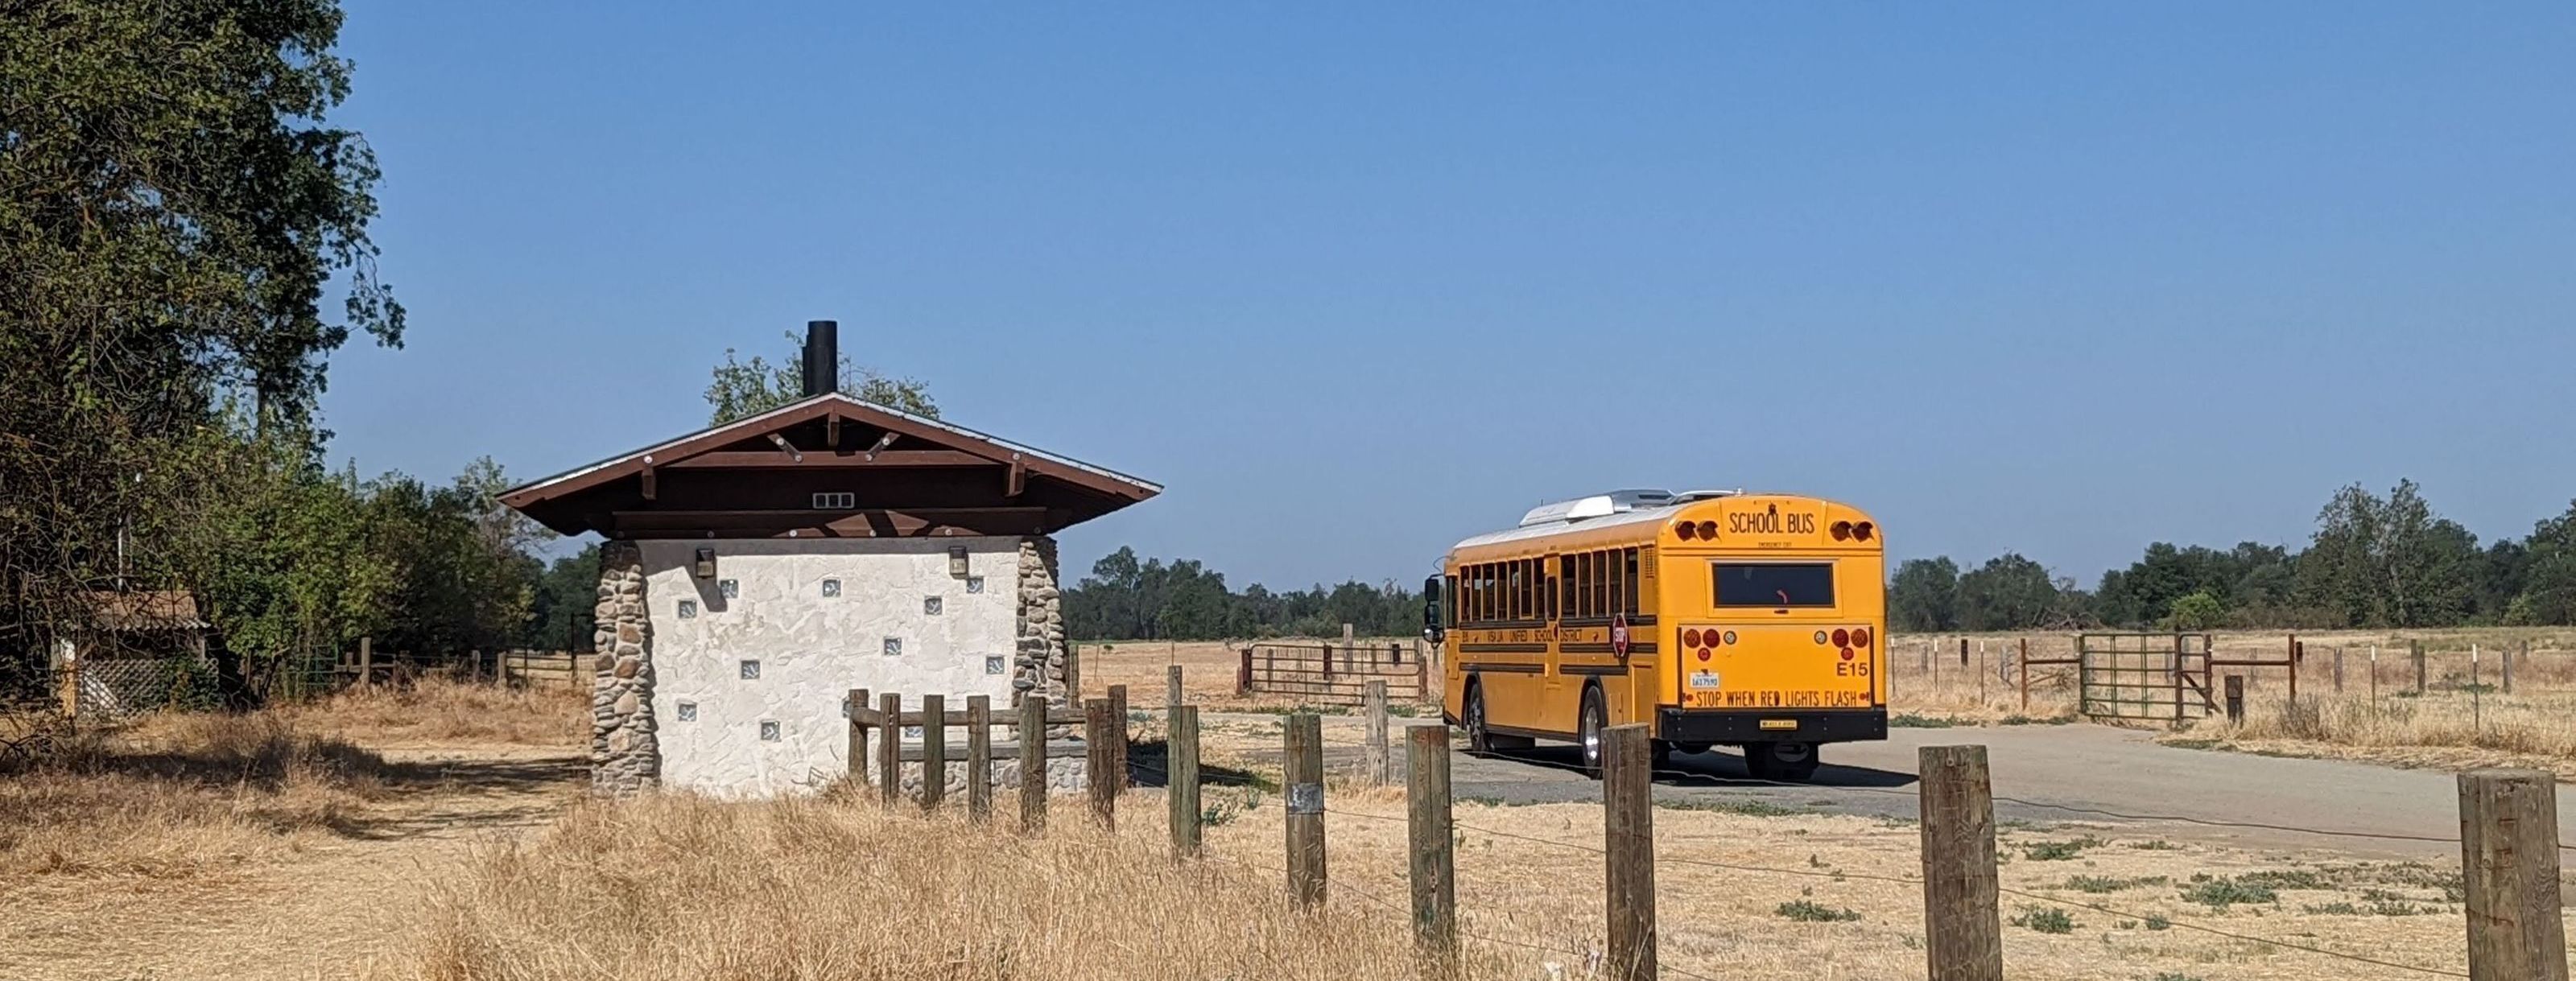 School Bus at Kaweah Oaks Preserve